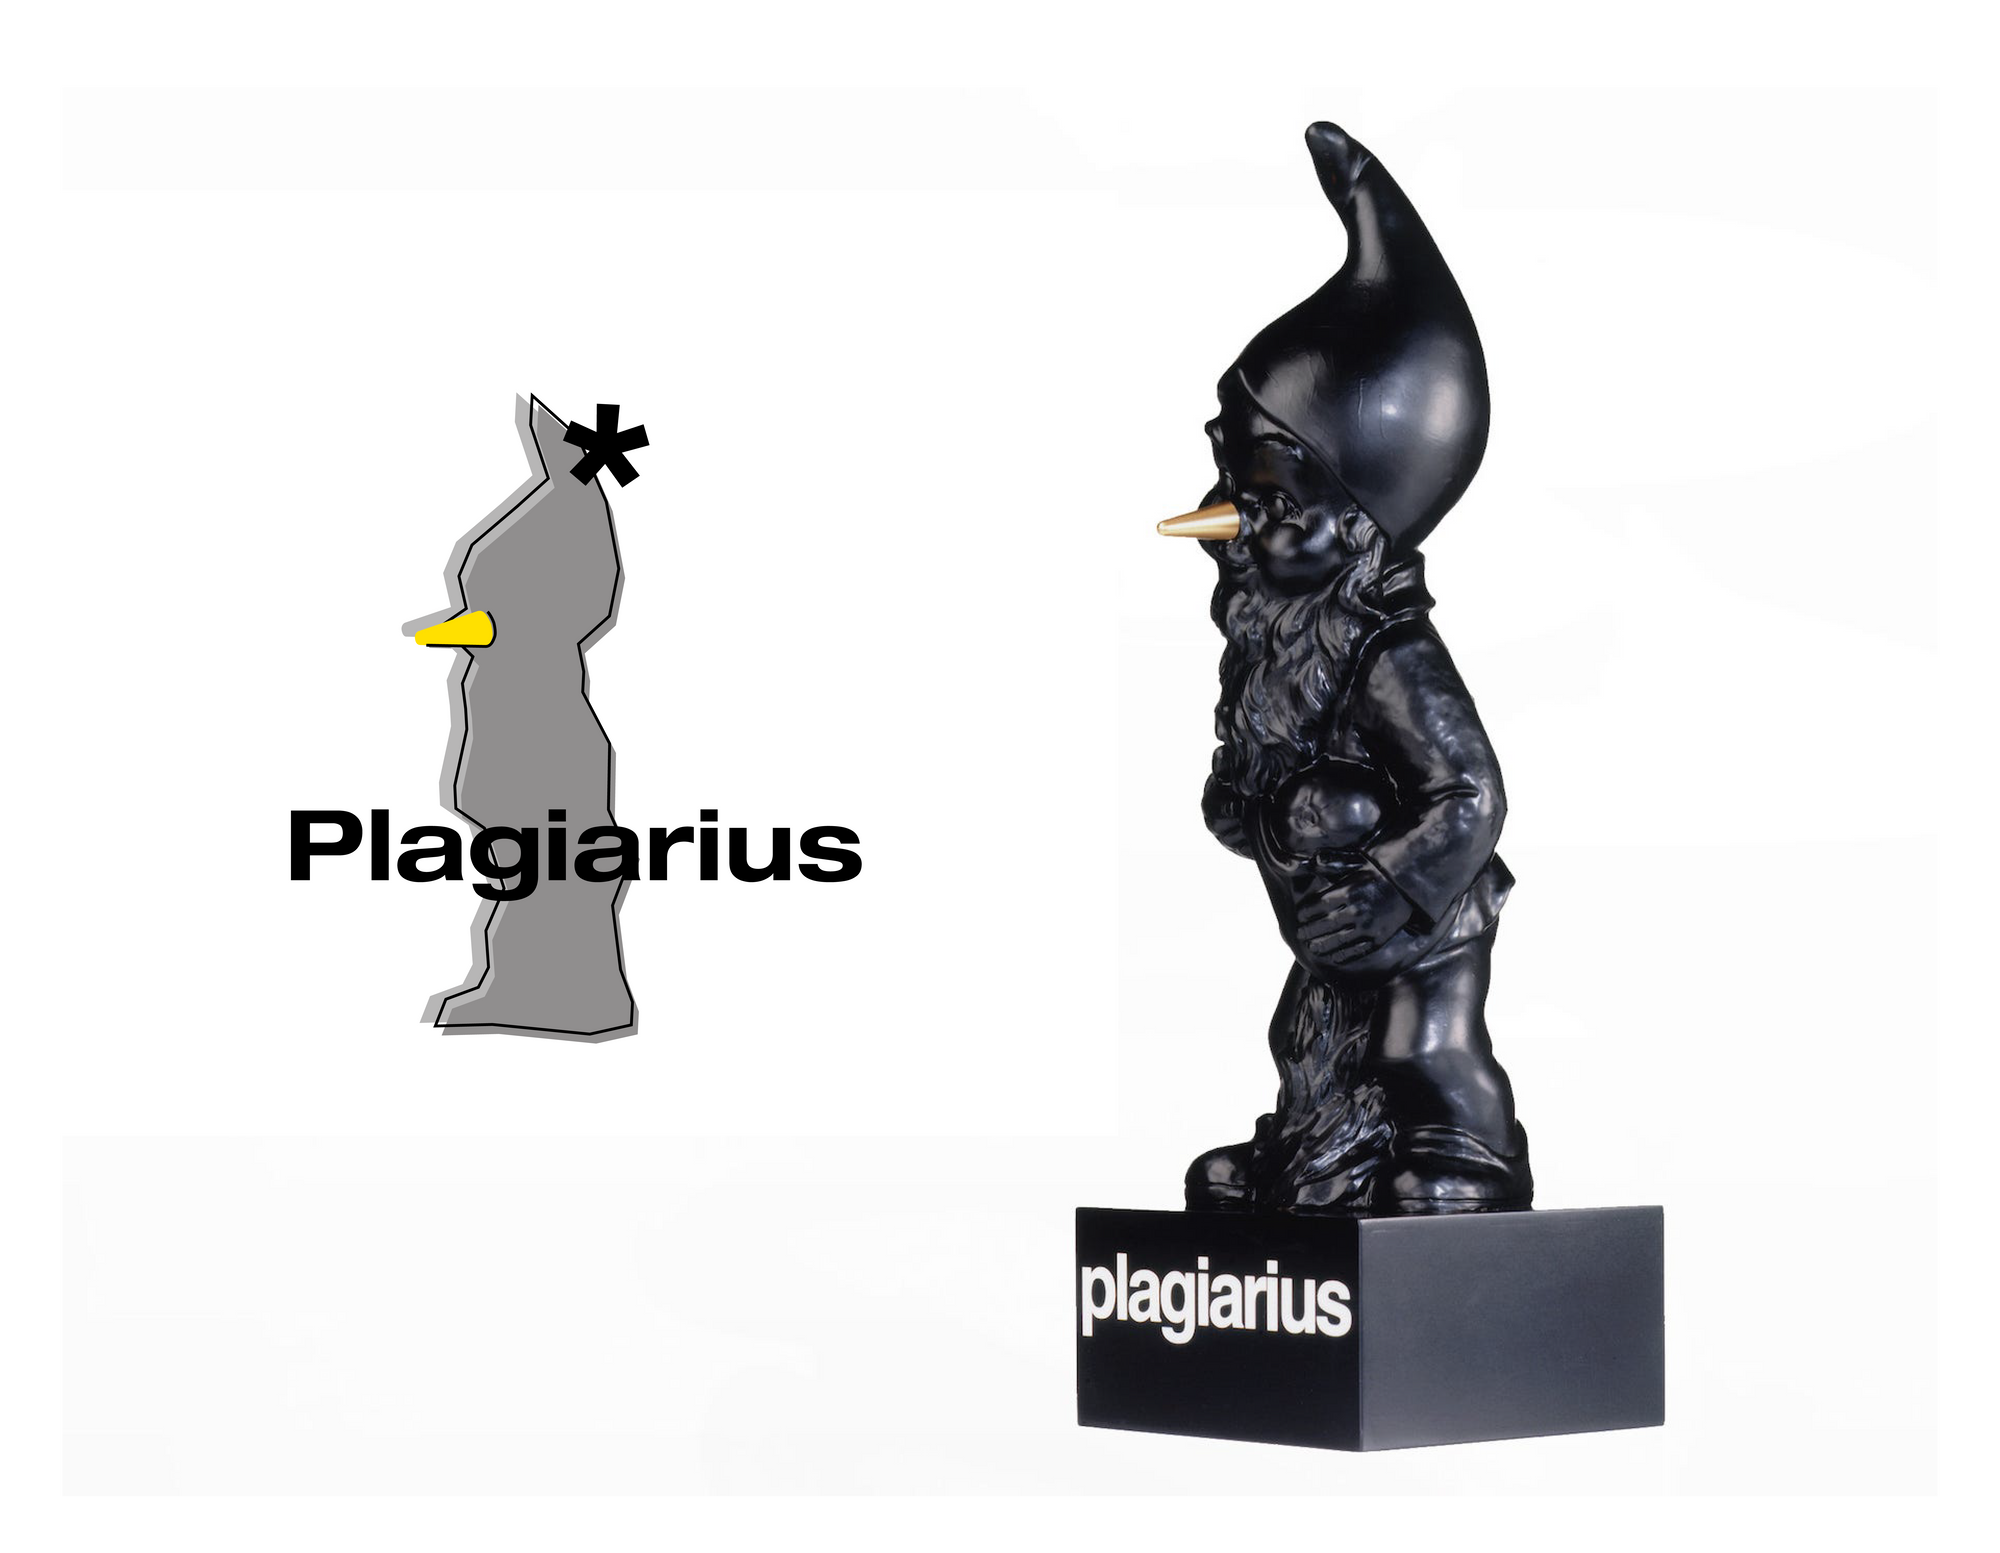 Plagiarius symbol & logo: Black dwarf with a golden nose